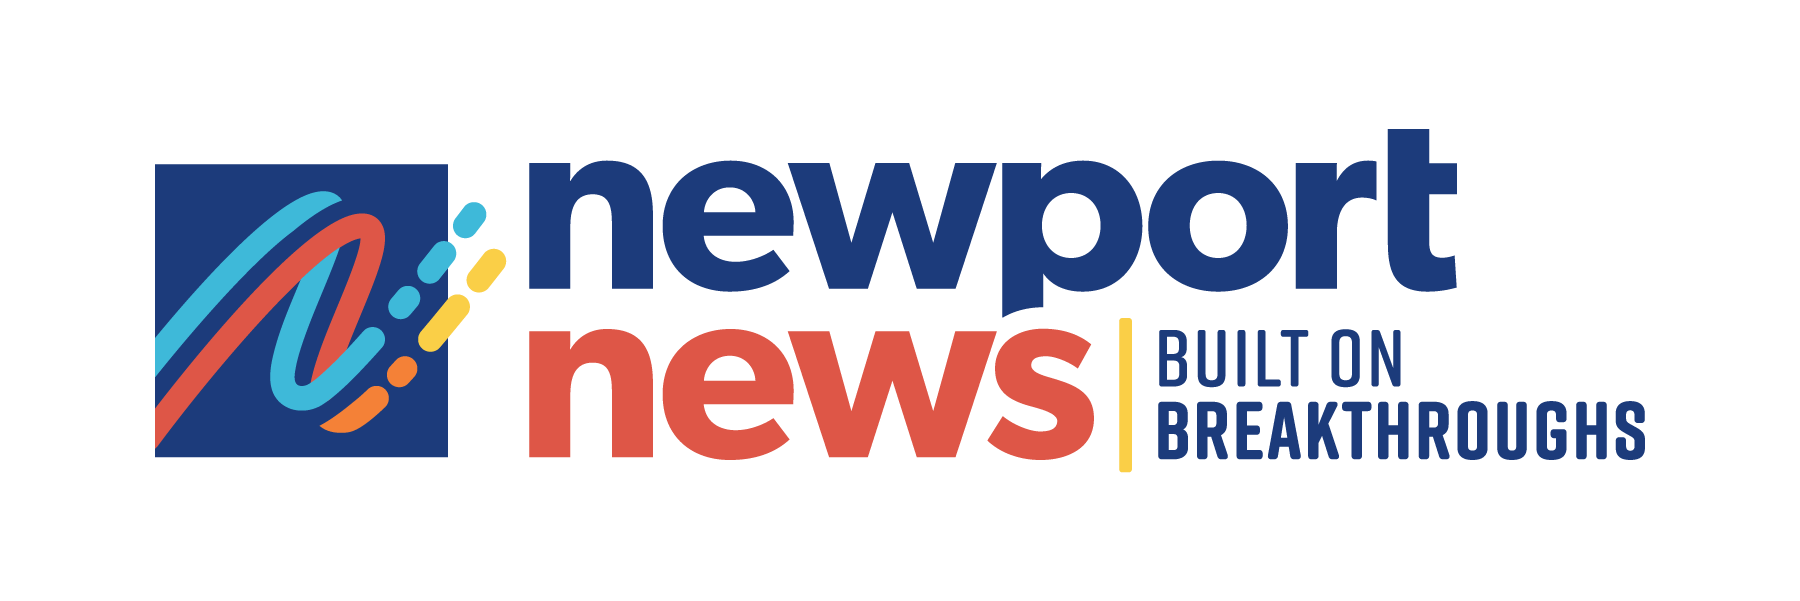 Color newport news logo with tagline 